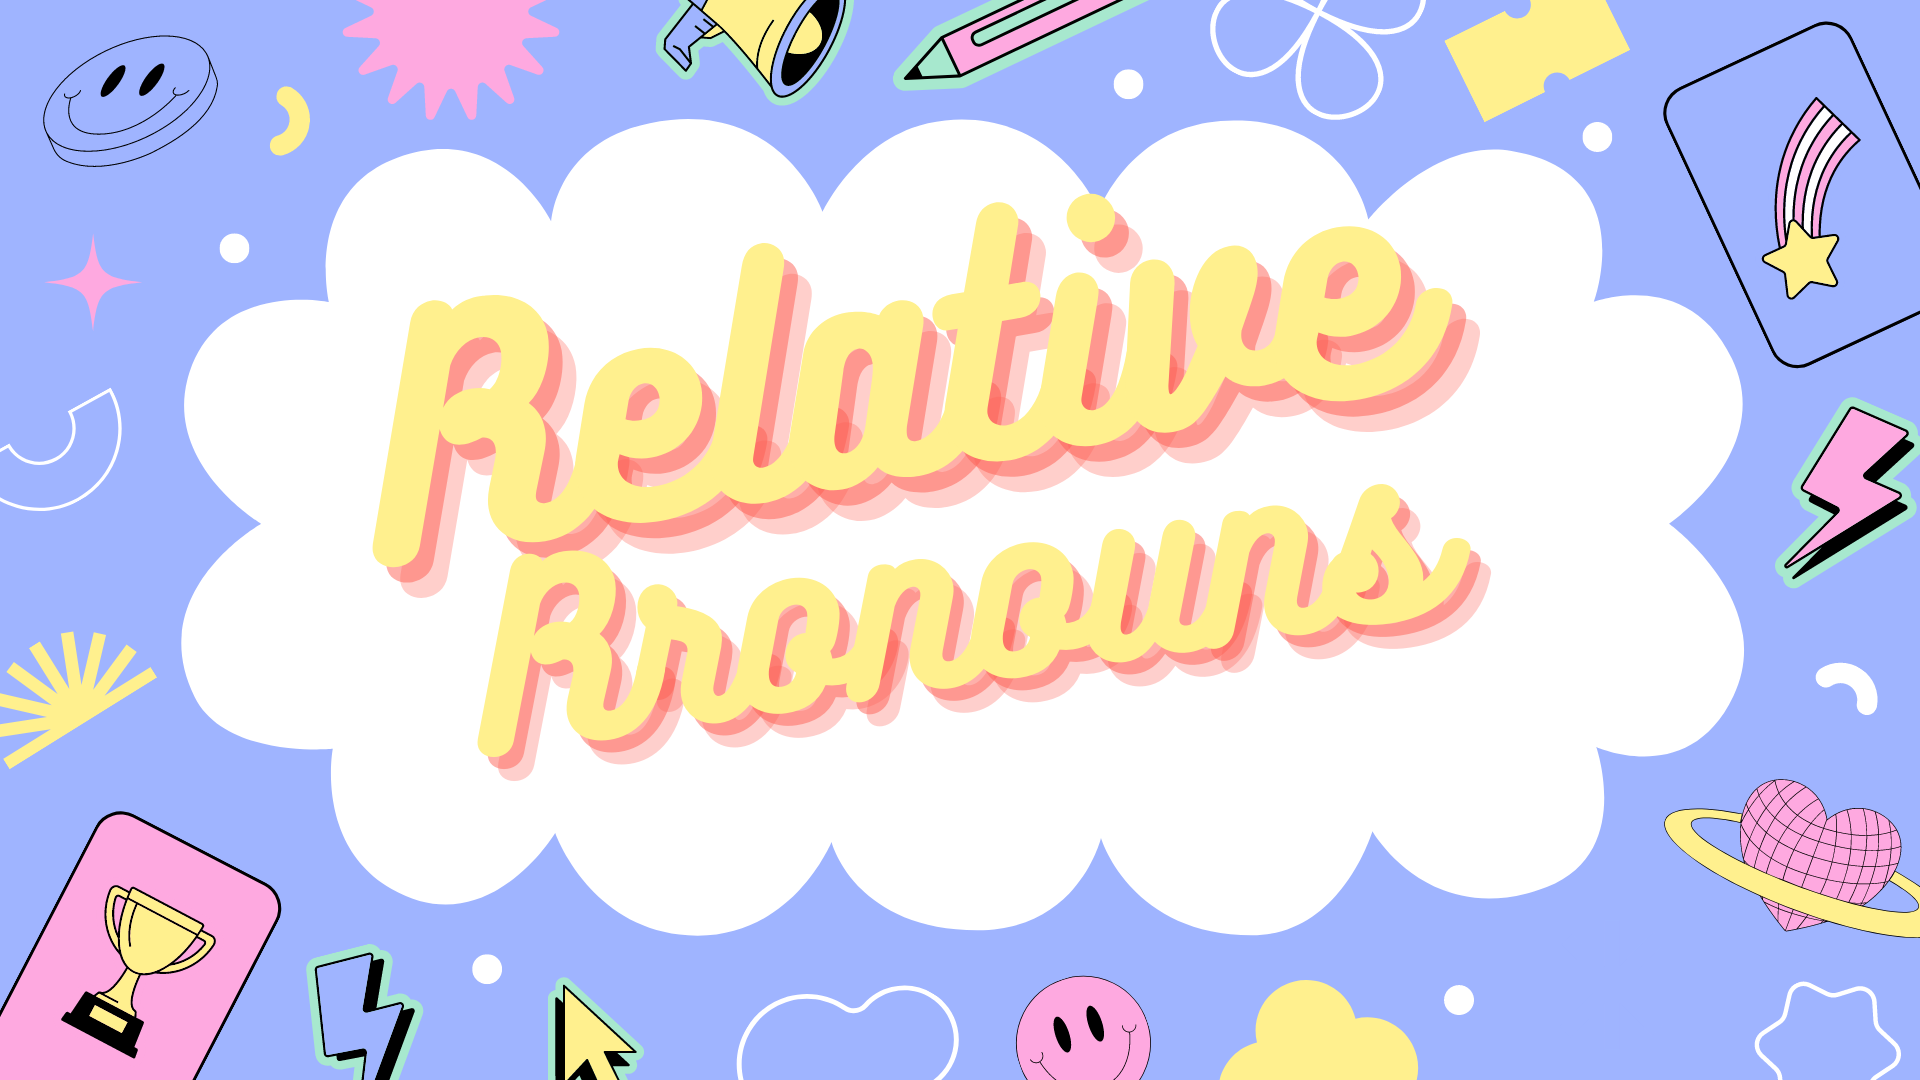 Relative Pronouns - Year 8 - Quizizz